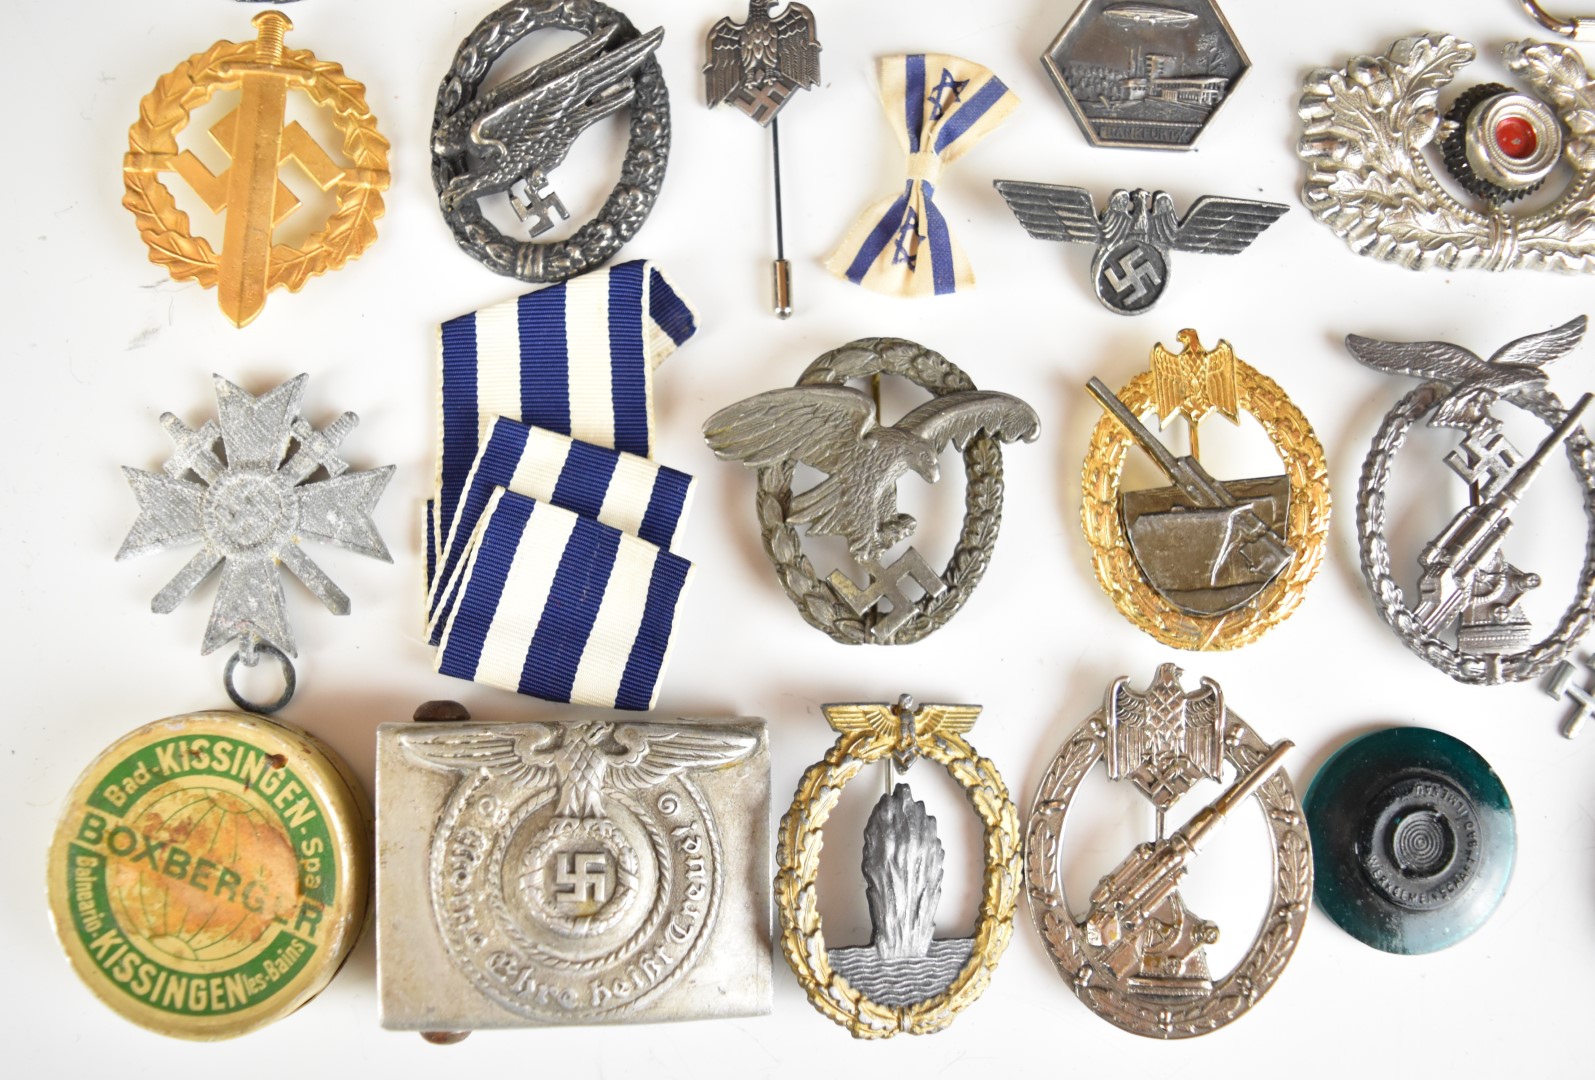 Replica German WW2 Nazi Third Reich badges, insignia and medals including High Seas Fleet, Artillery - Image 8 of 16